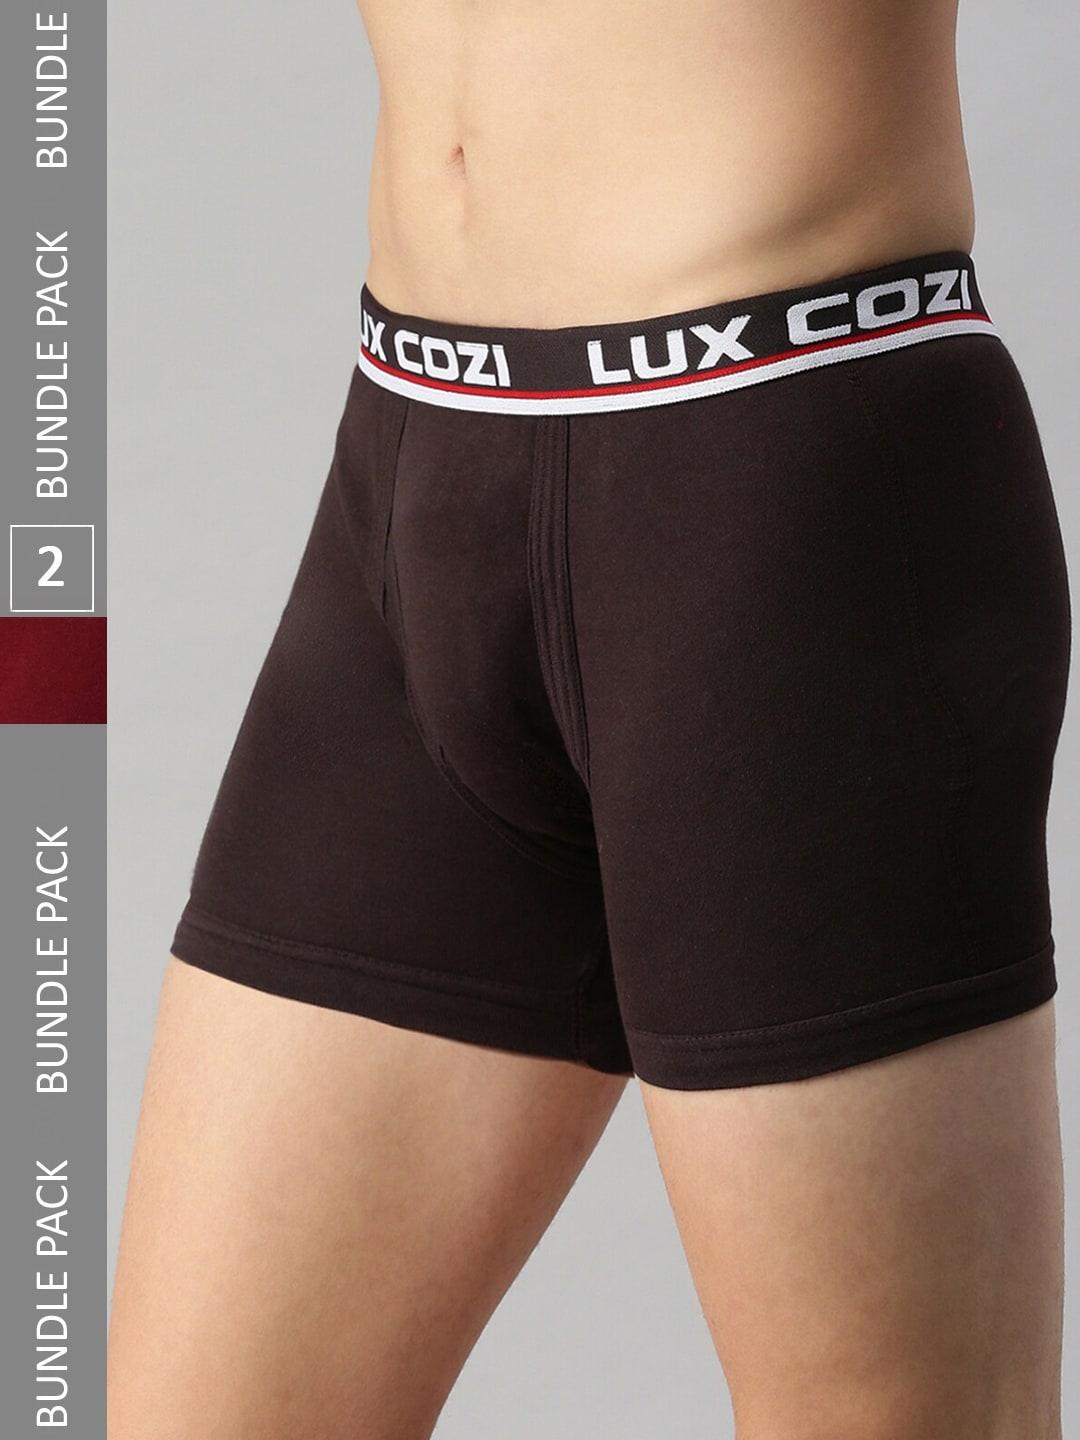 lux cozi men pack of 2 mid-rise breathable trunks cozi_intlock_cof_mrn_2pc